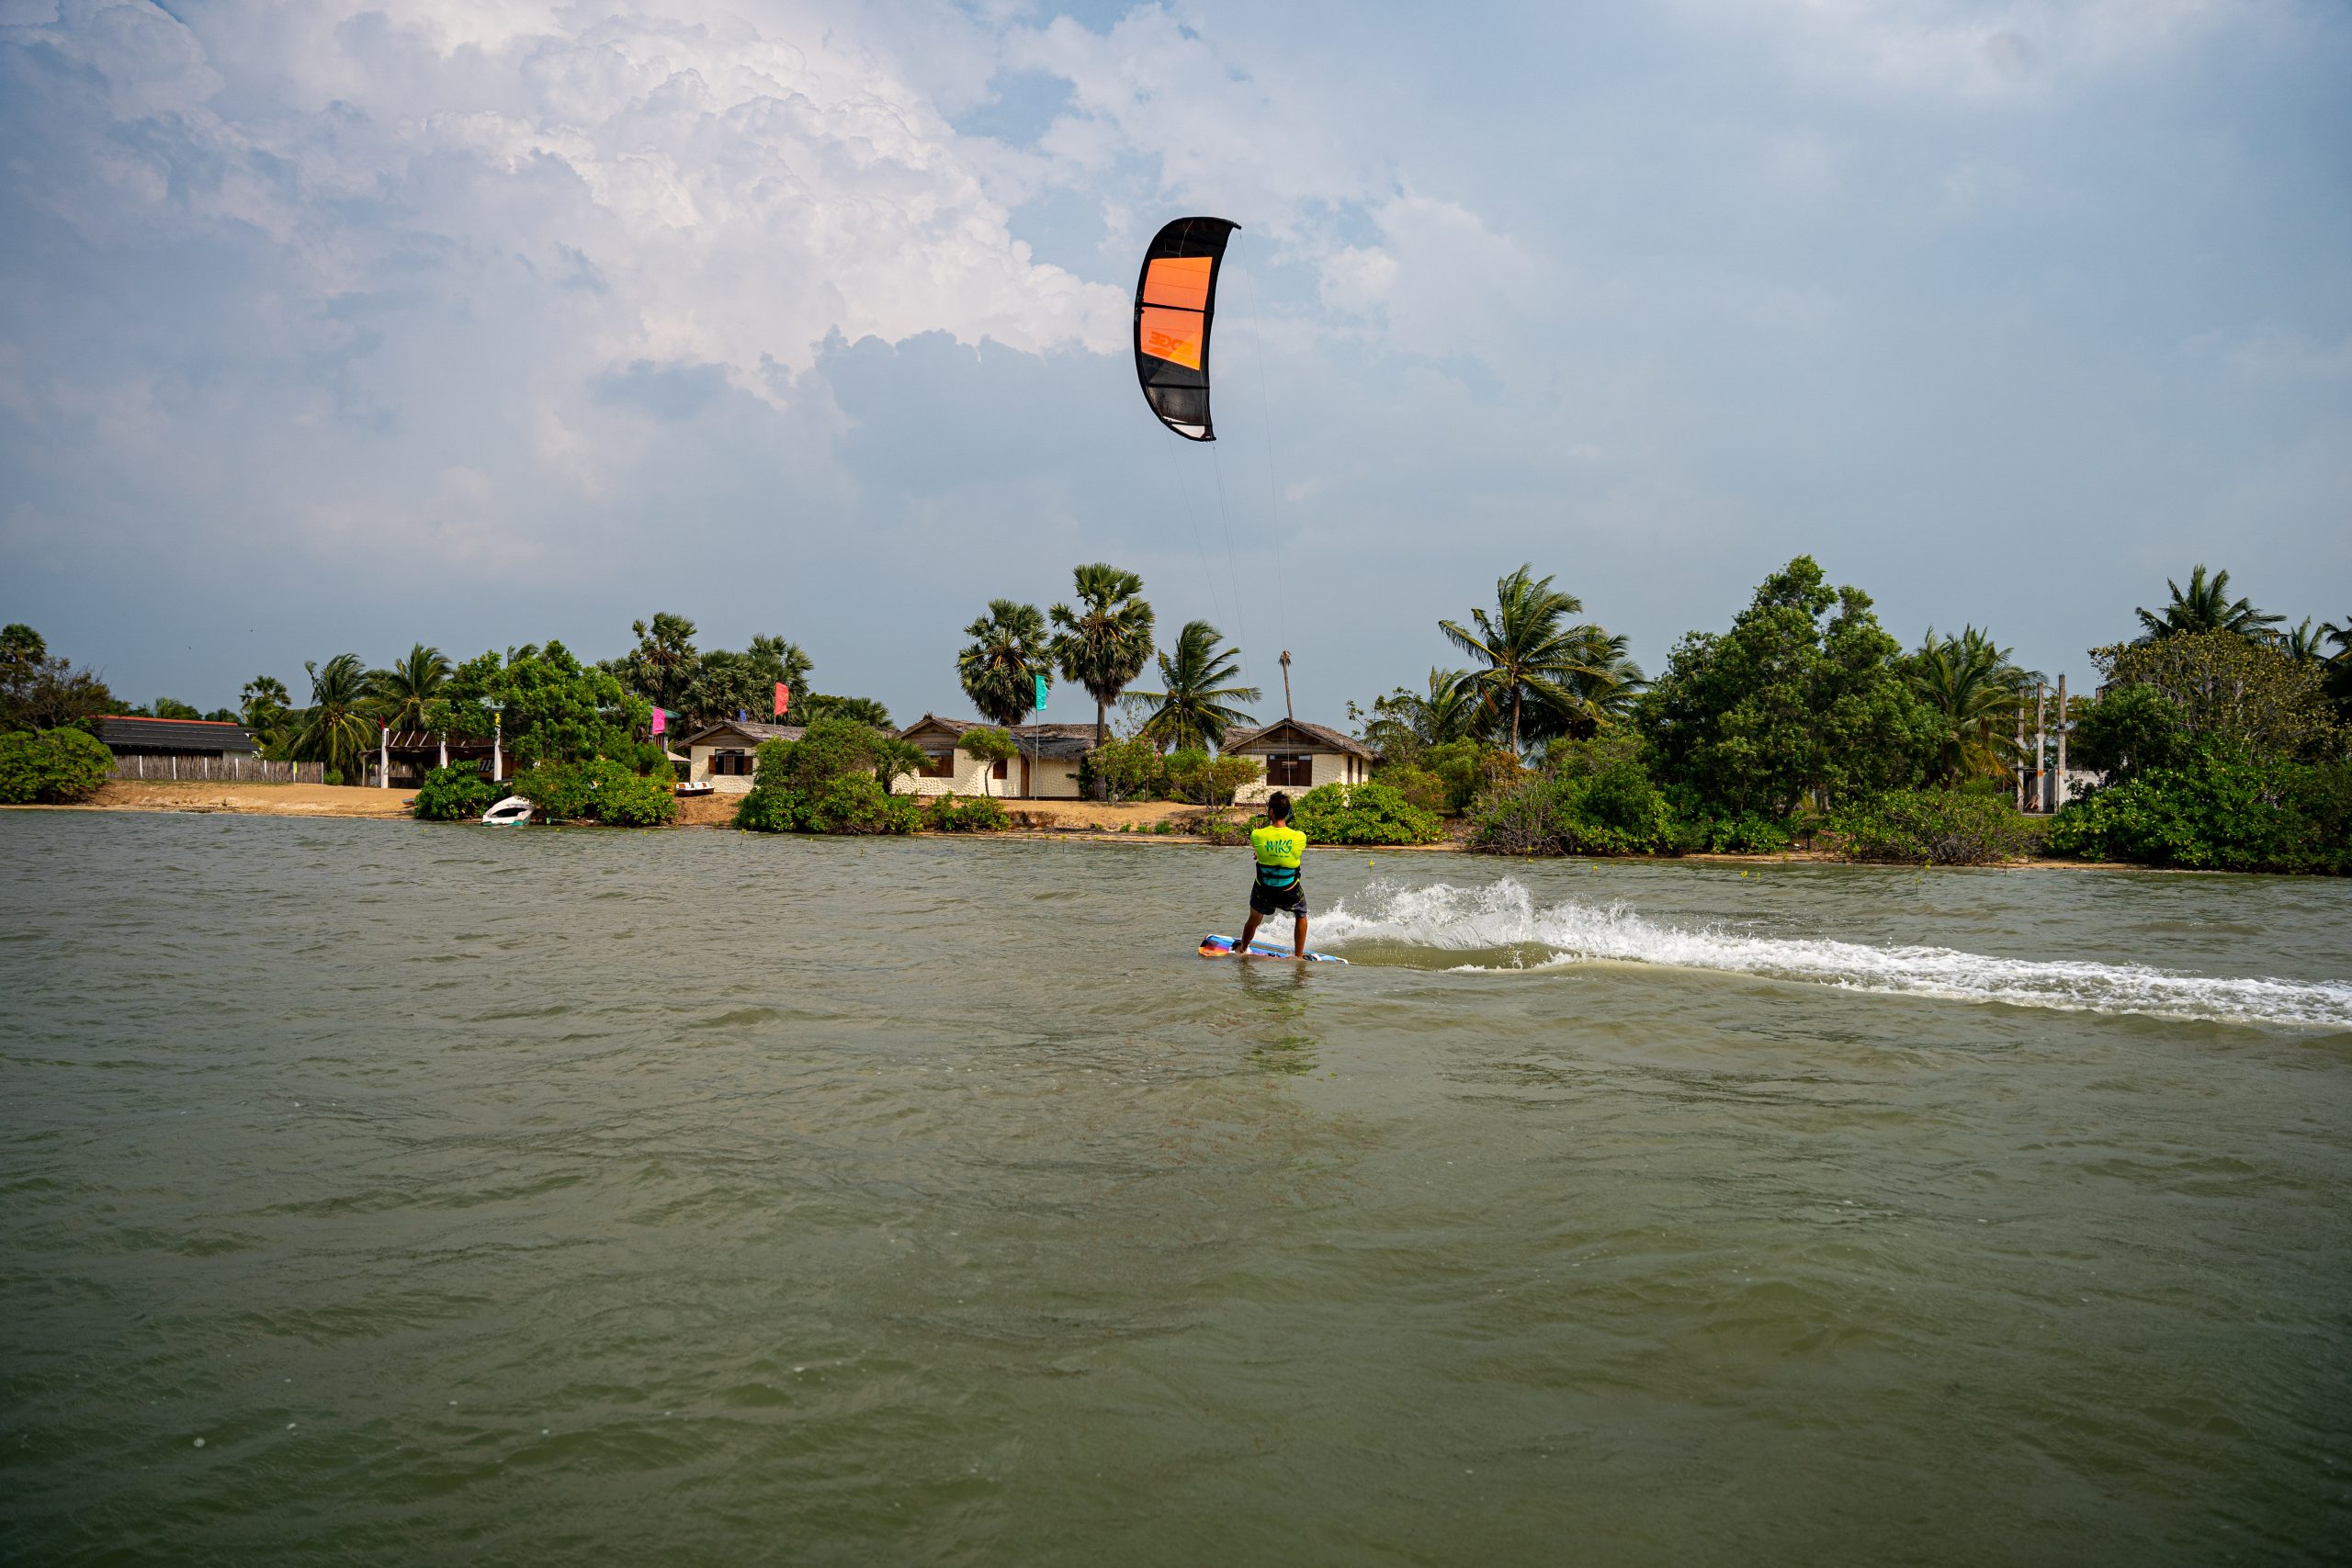 Kitesurfing season in Sri Lanka